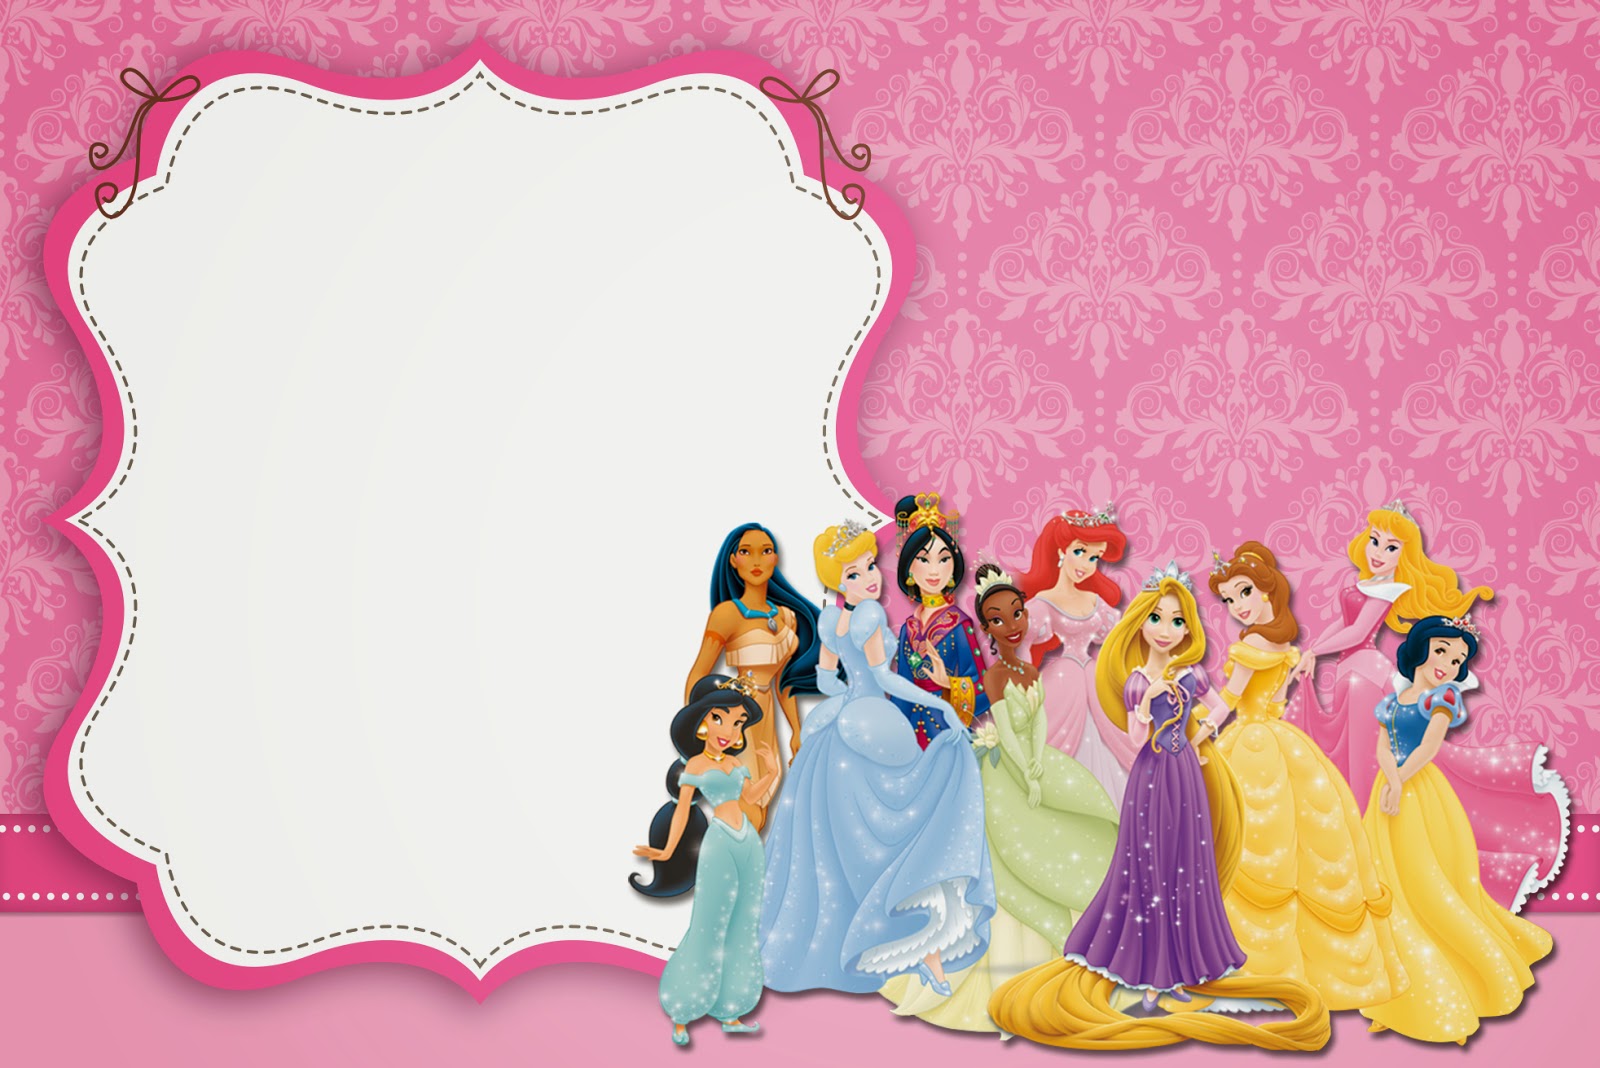 Mountain Wedding Invitations: Free Printable Disney Princess Invitations